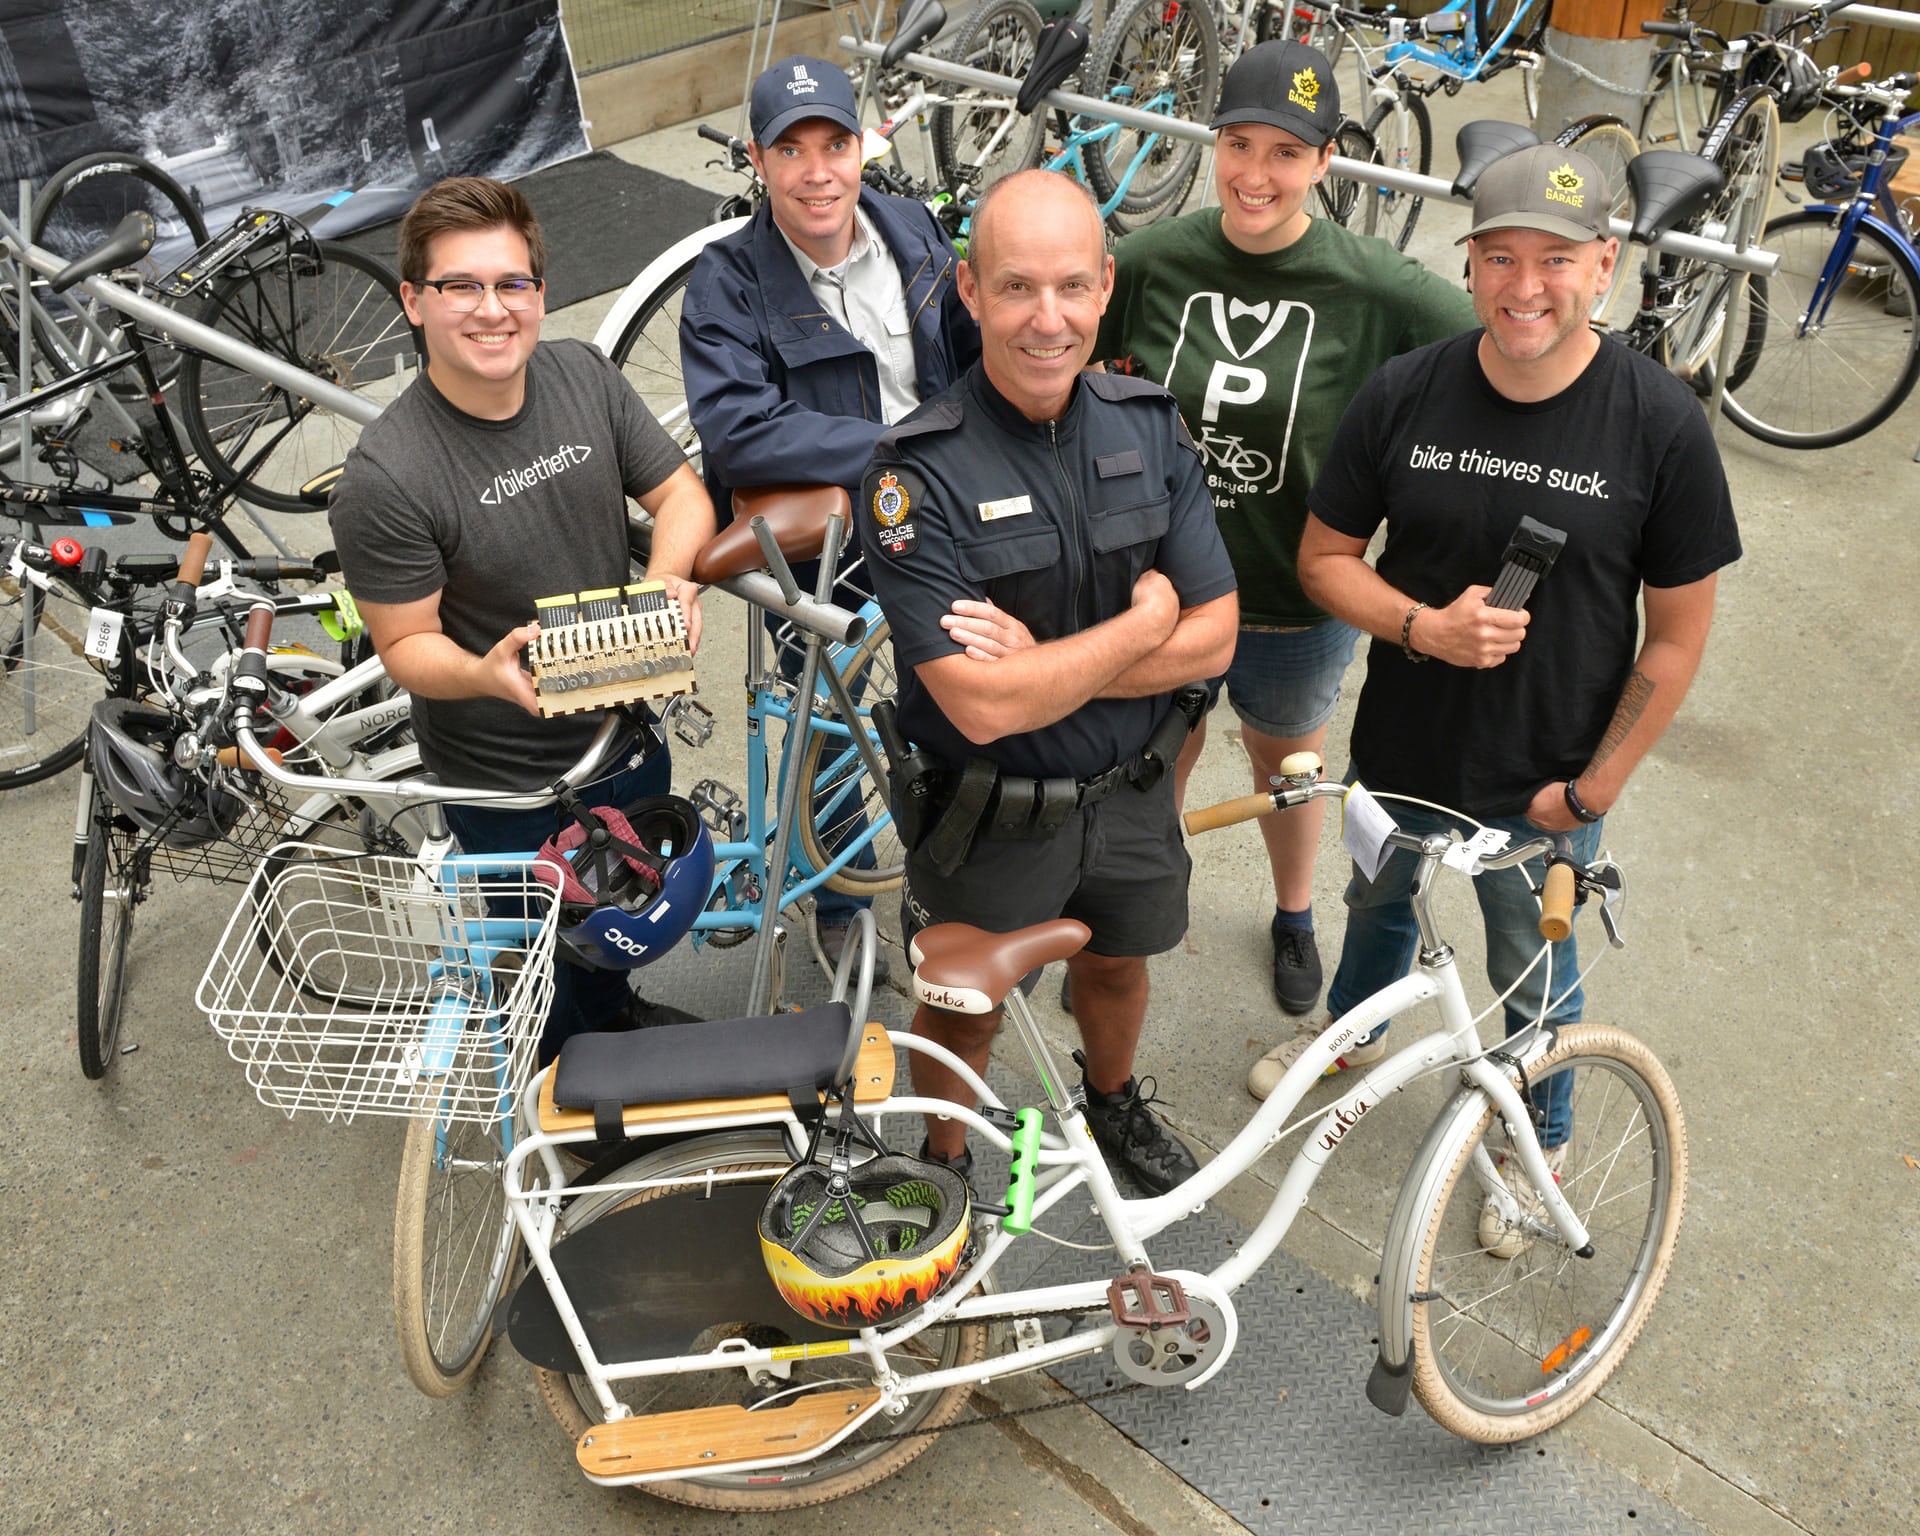 app κατά της κλοπής ποδηλάτων στο Βανκούβερ - 5